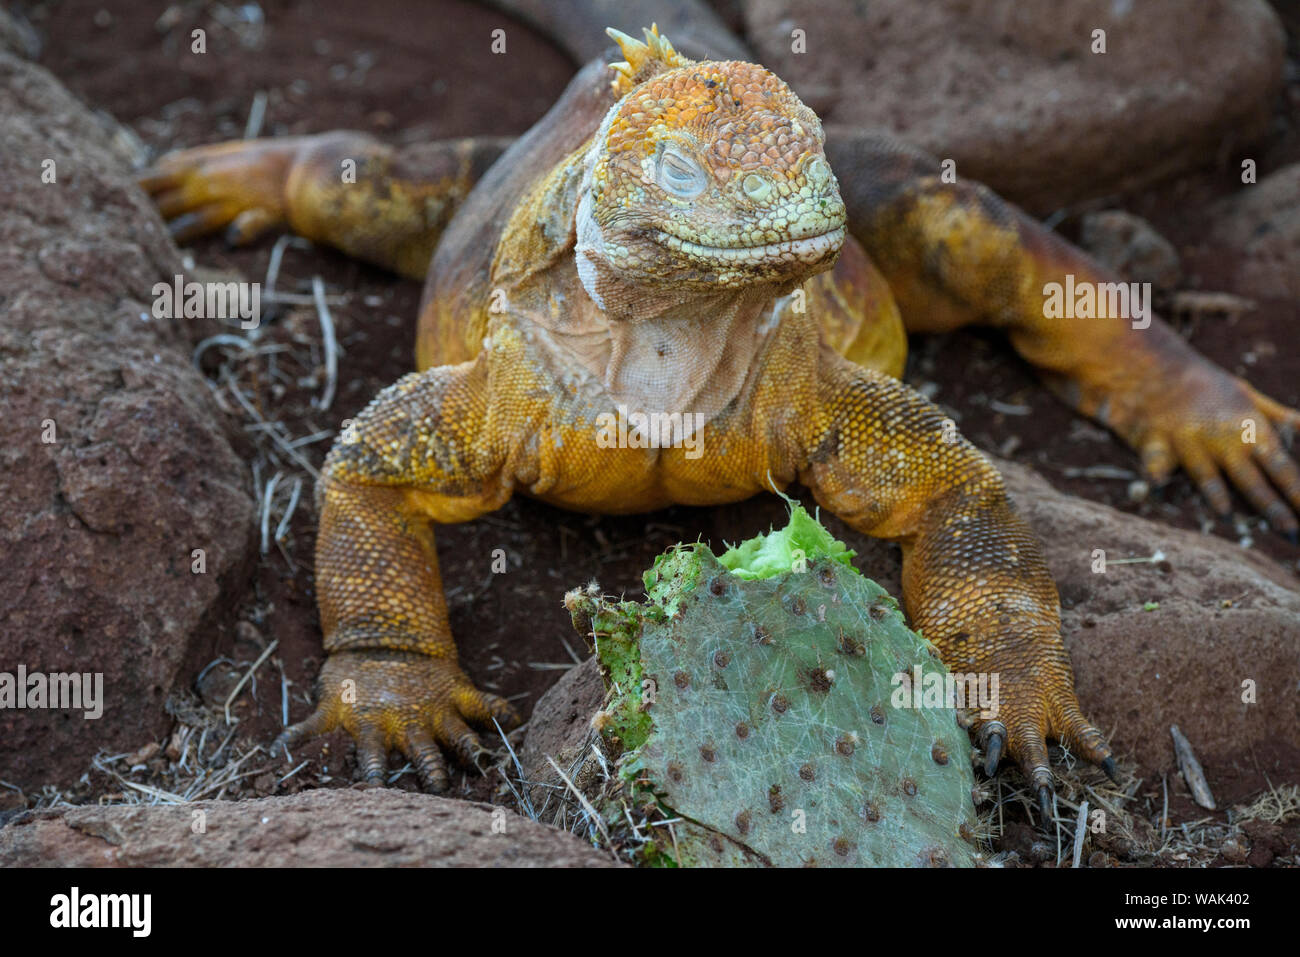 Ecuador, Galapagos Islands, Santa Fe Island. Santa Fe land iguana feeds on favorite food of Opuntia cactus. Stock Photo